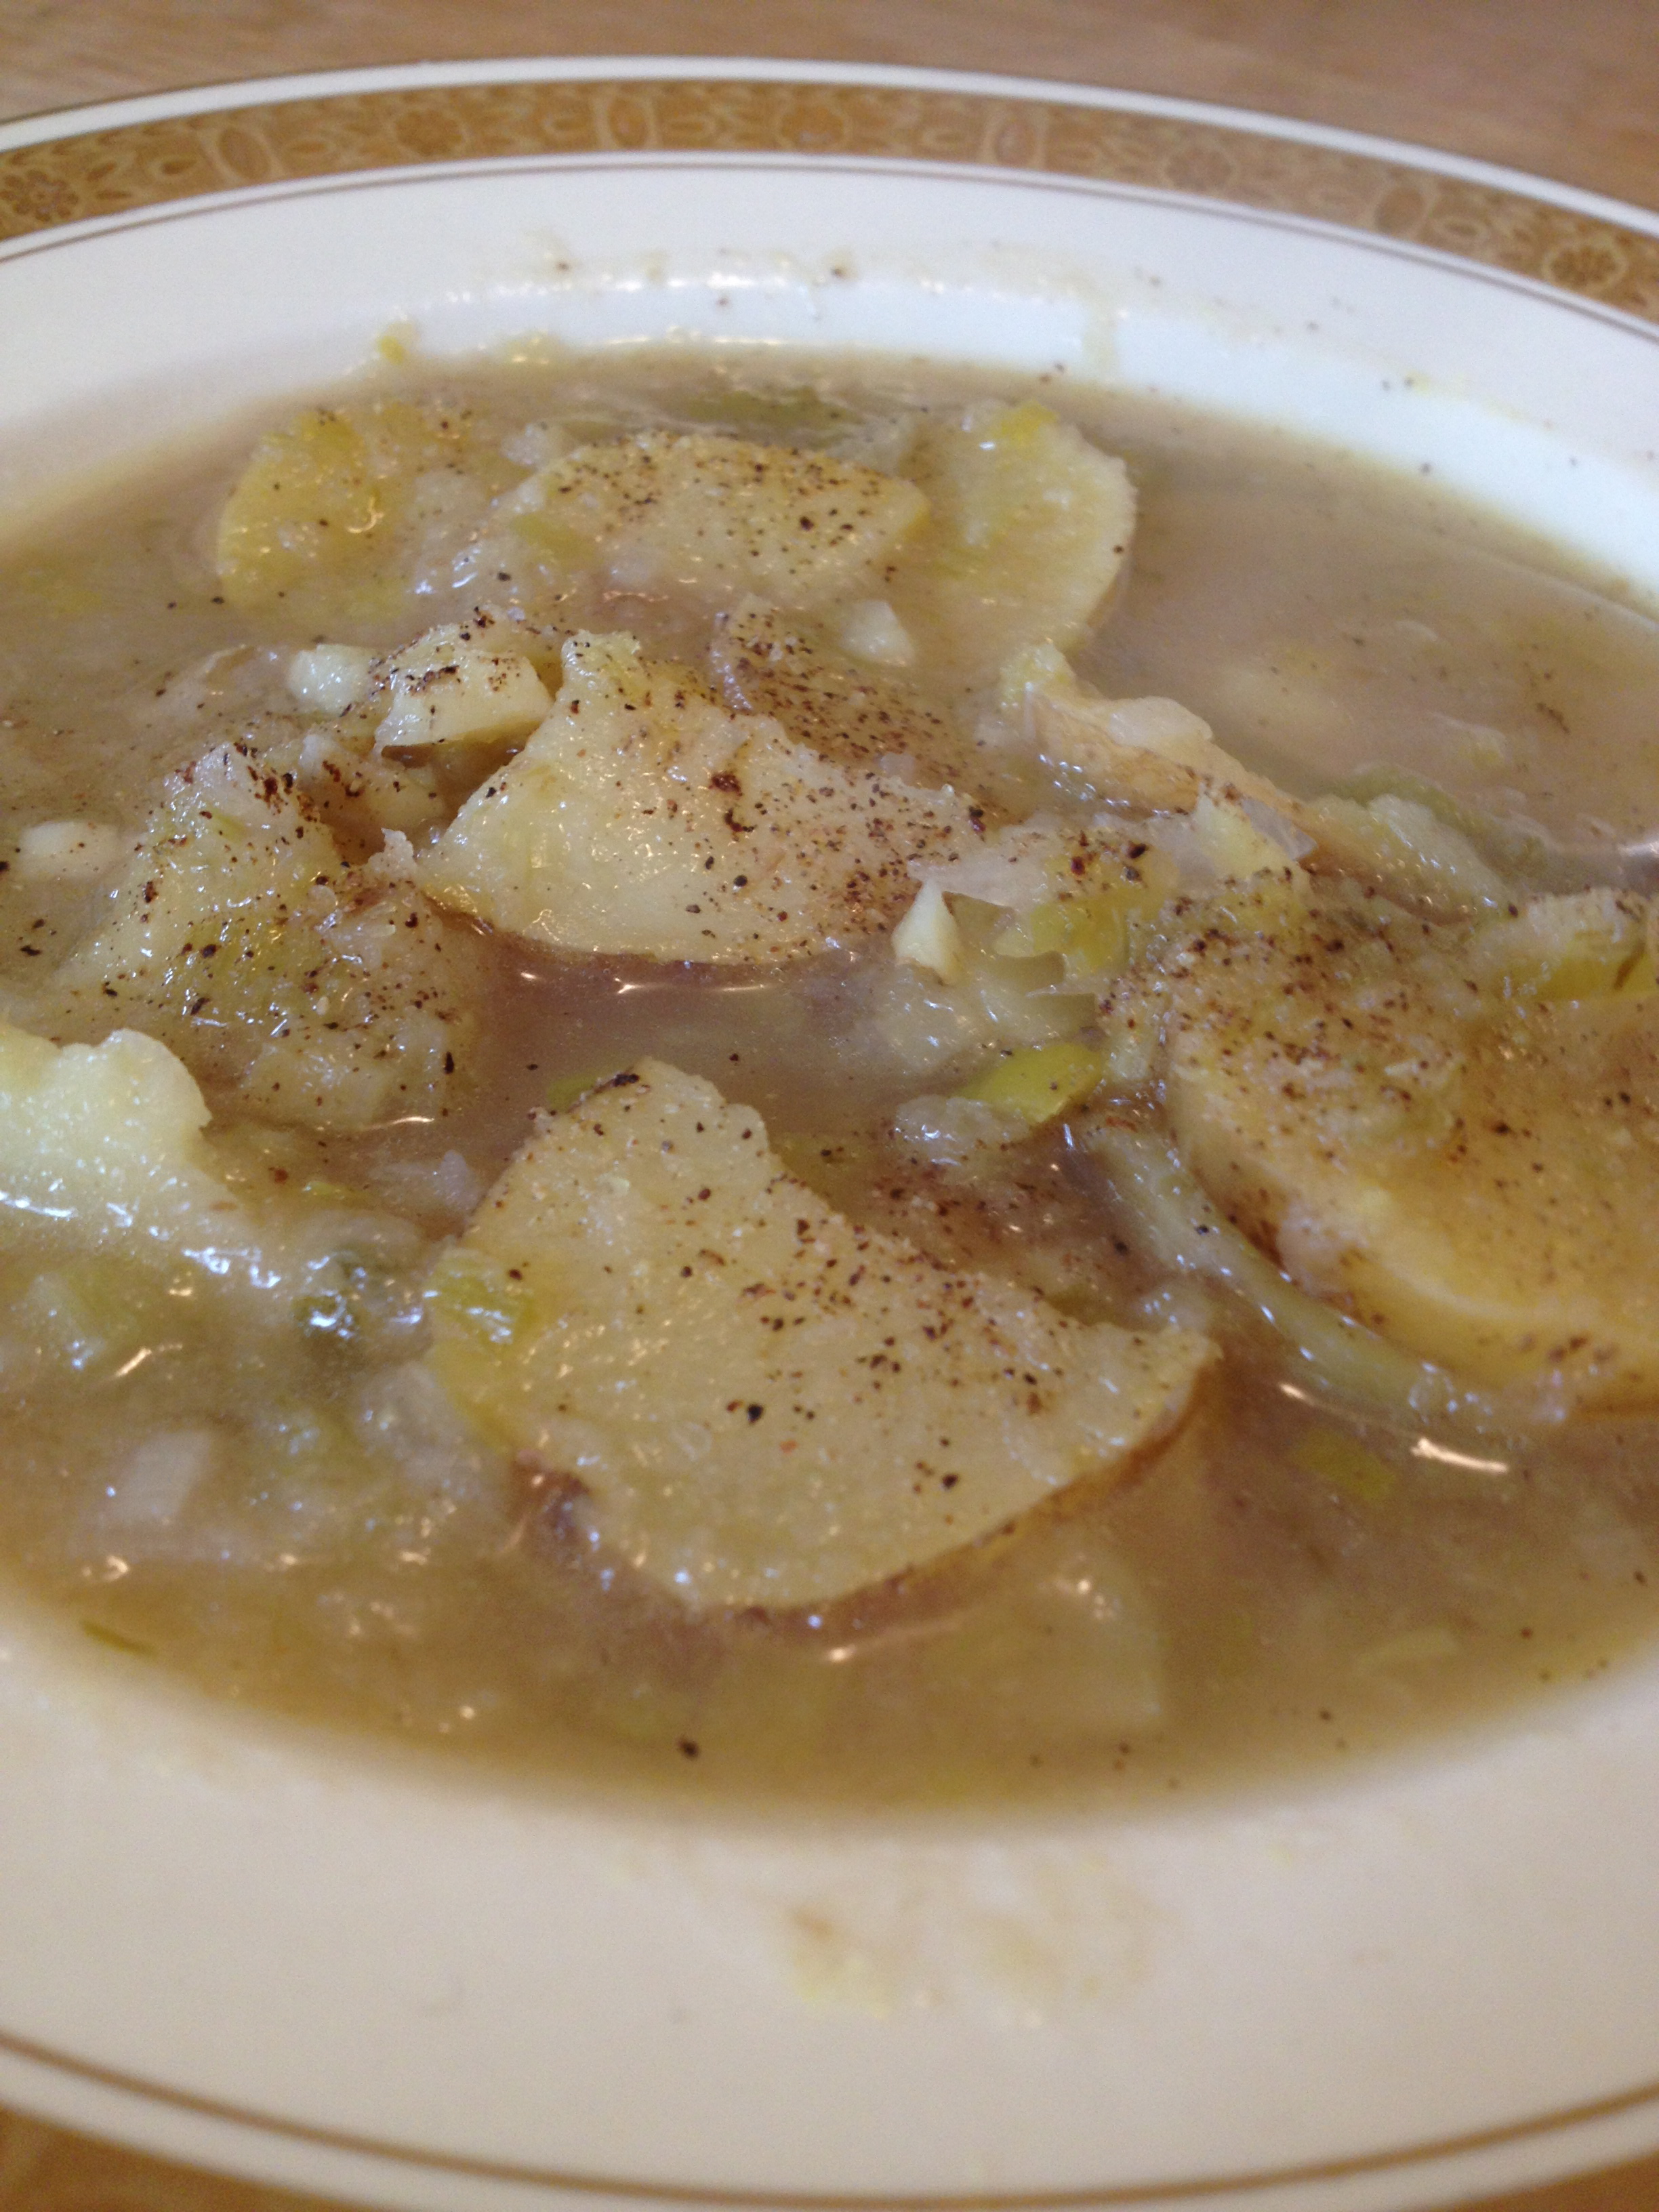 potato leek soup | stems and all